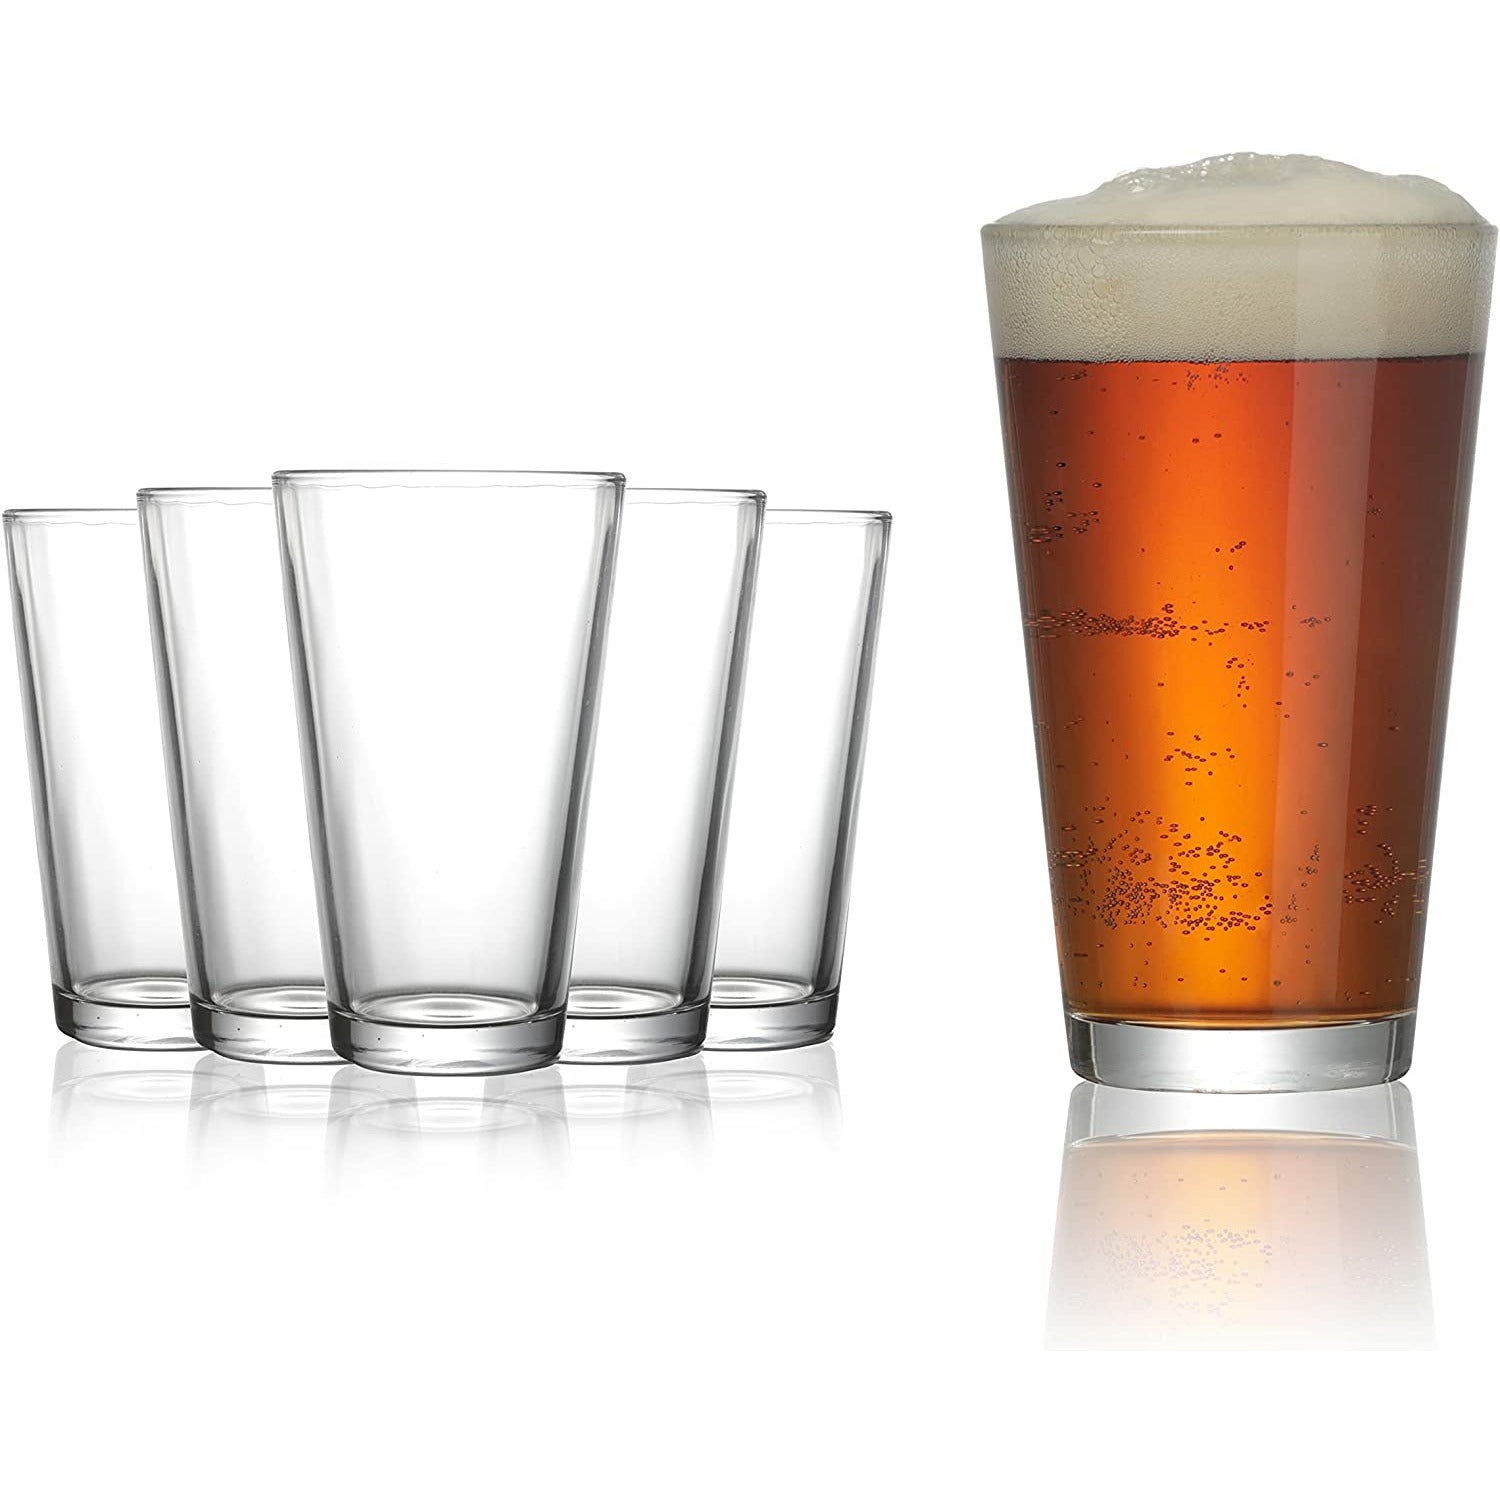 Glaver's Drinking Glasses, Beer Pint 16 oz. Glass